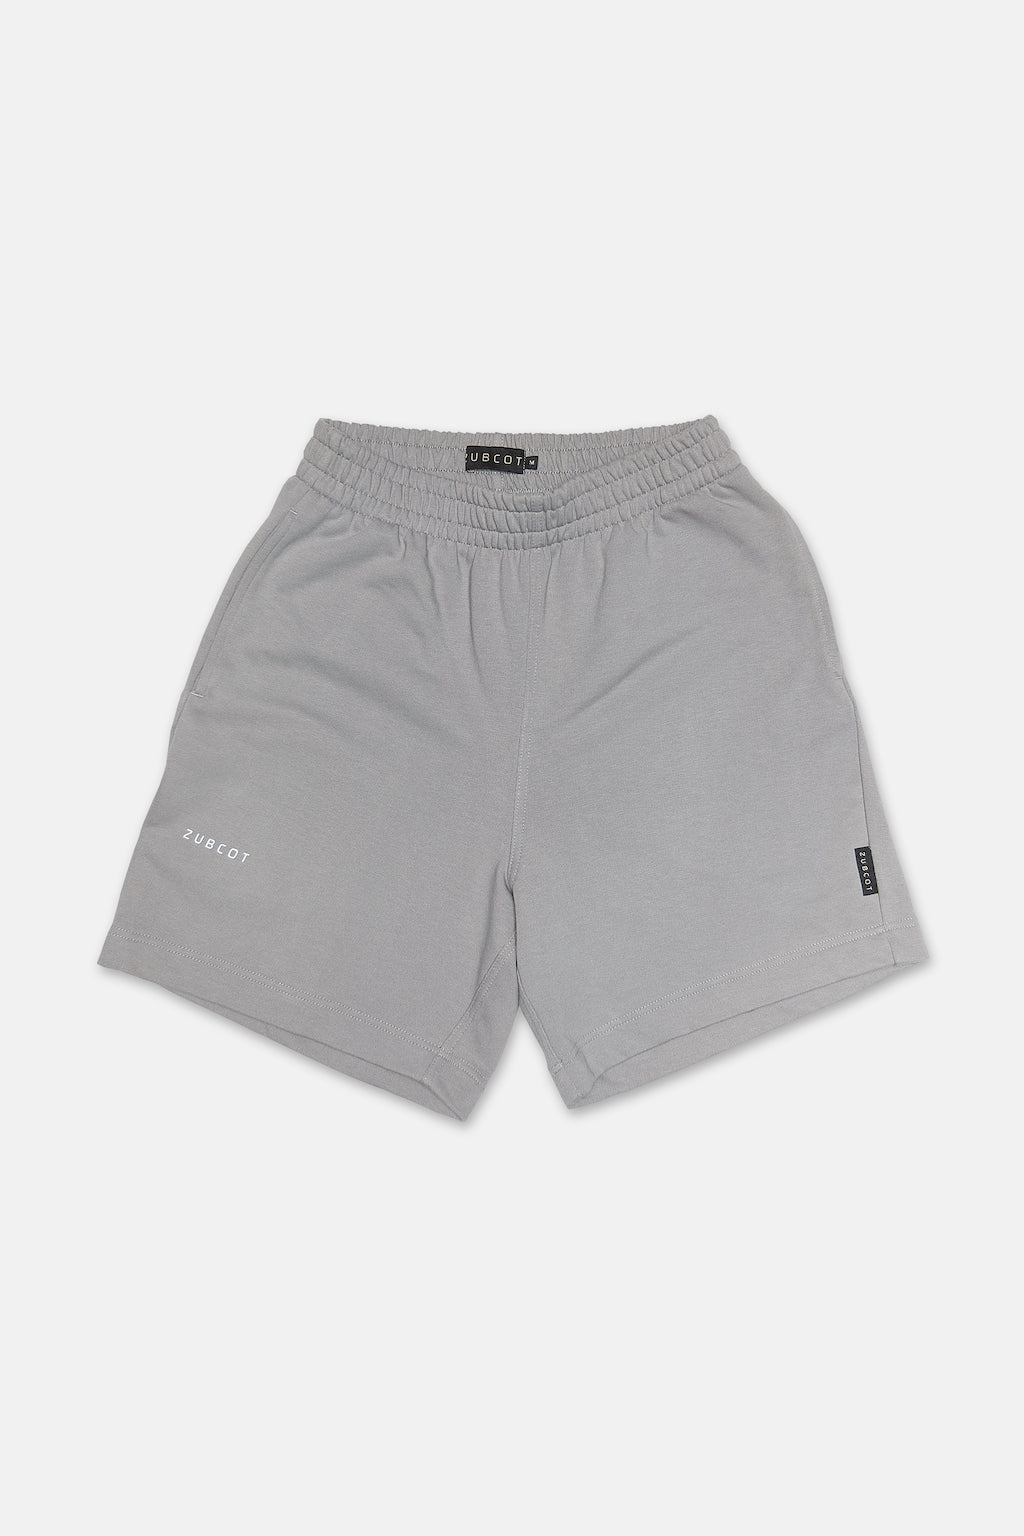 Unisex Shorts -GRAPHITE